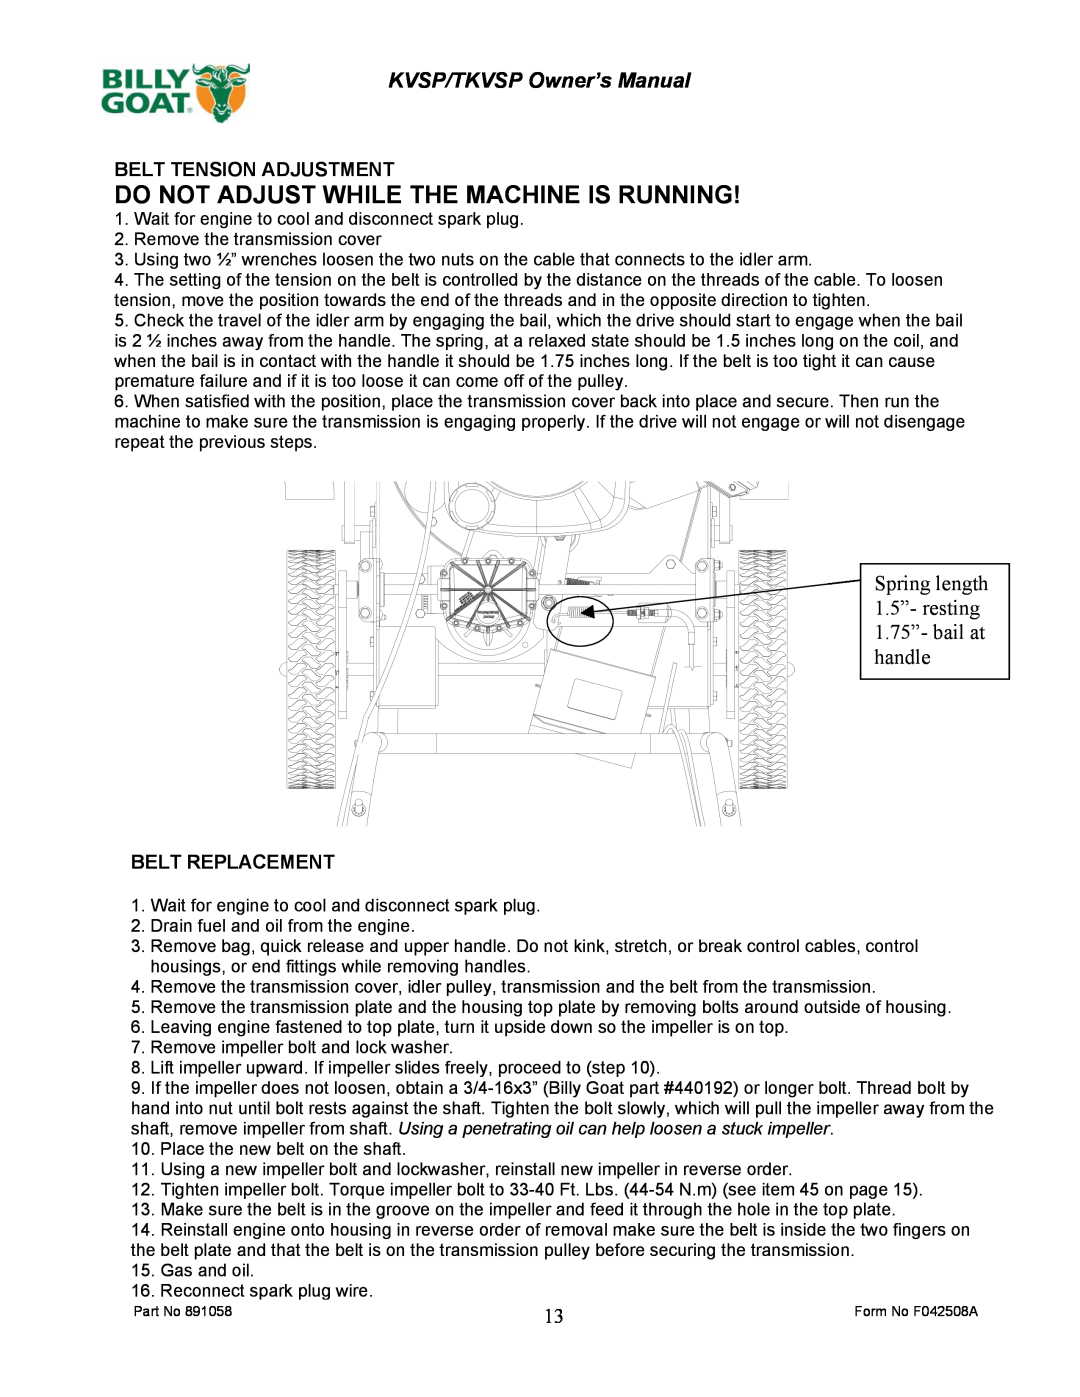 Billy Goat F042508A Do Not Adjust While The Machine Is Running, KVSP/TKVSP Owner’s Manual, Belt Tension Adjustment 